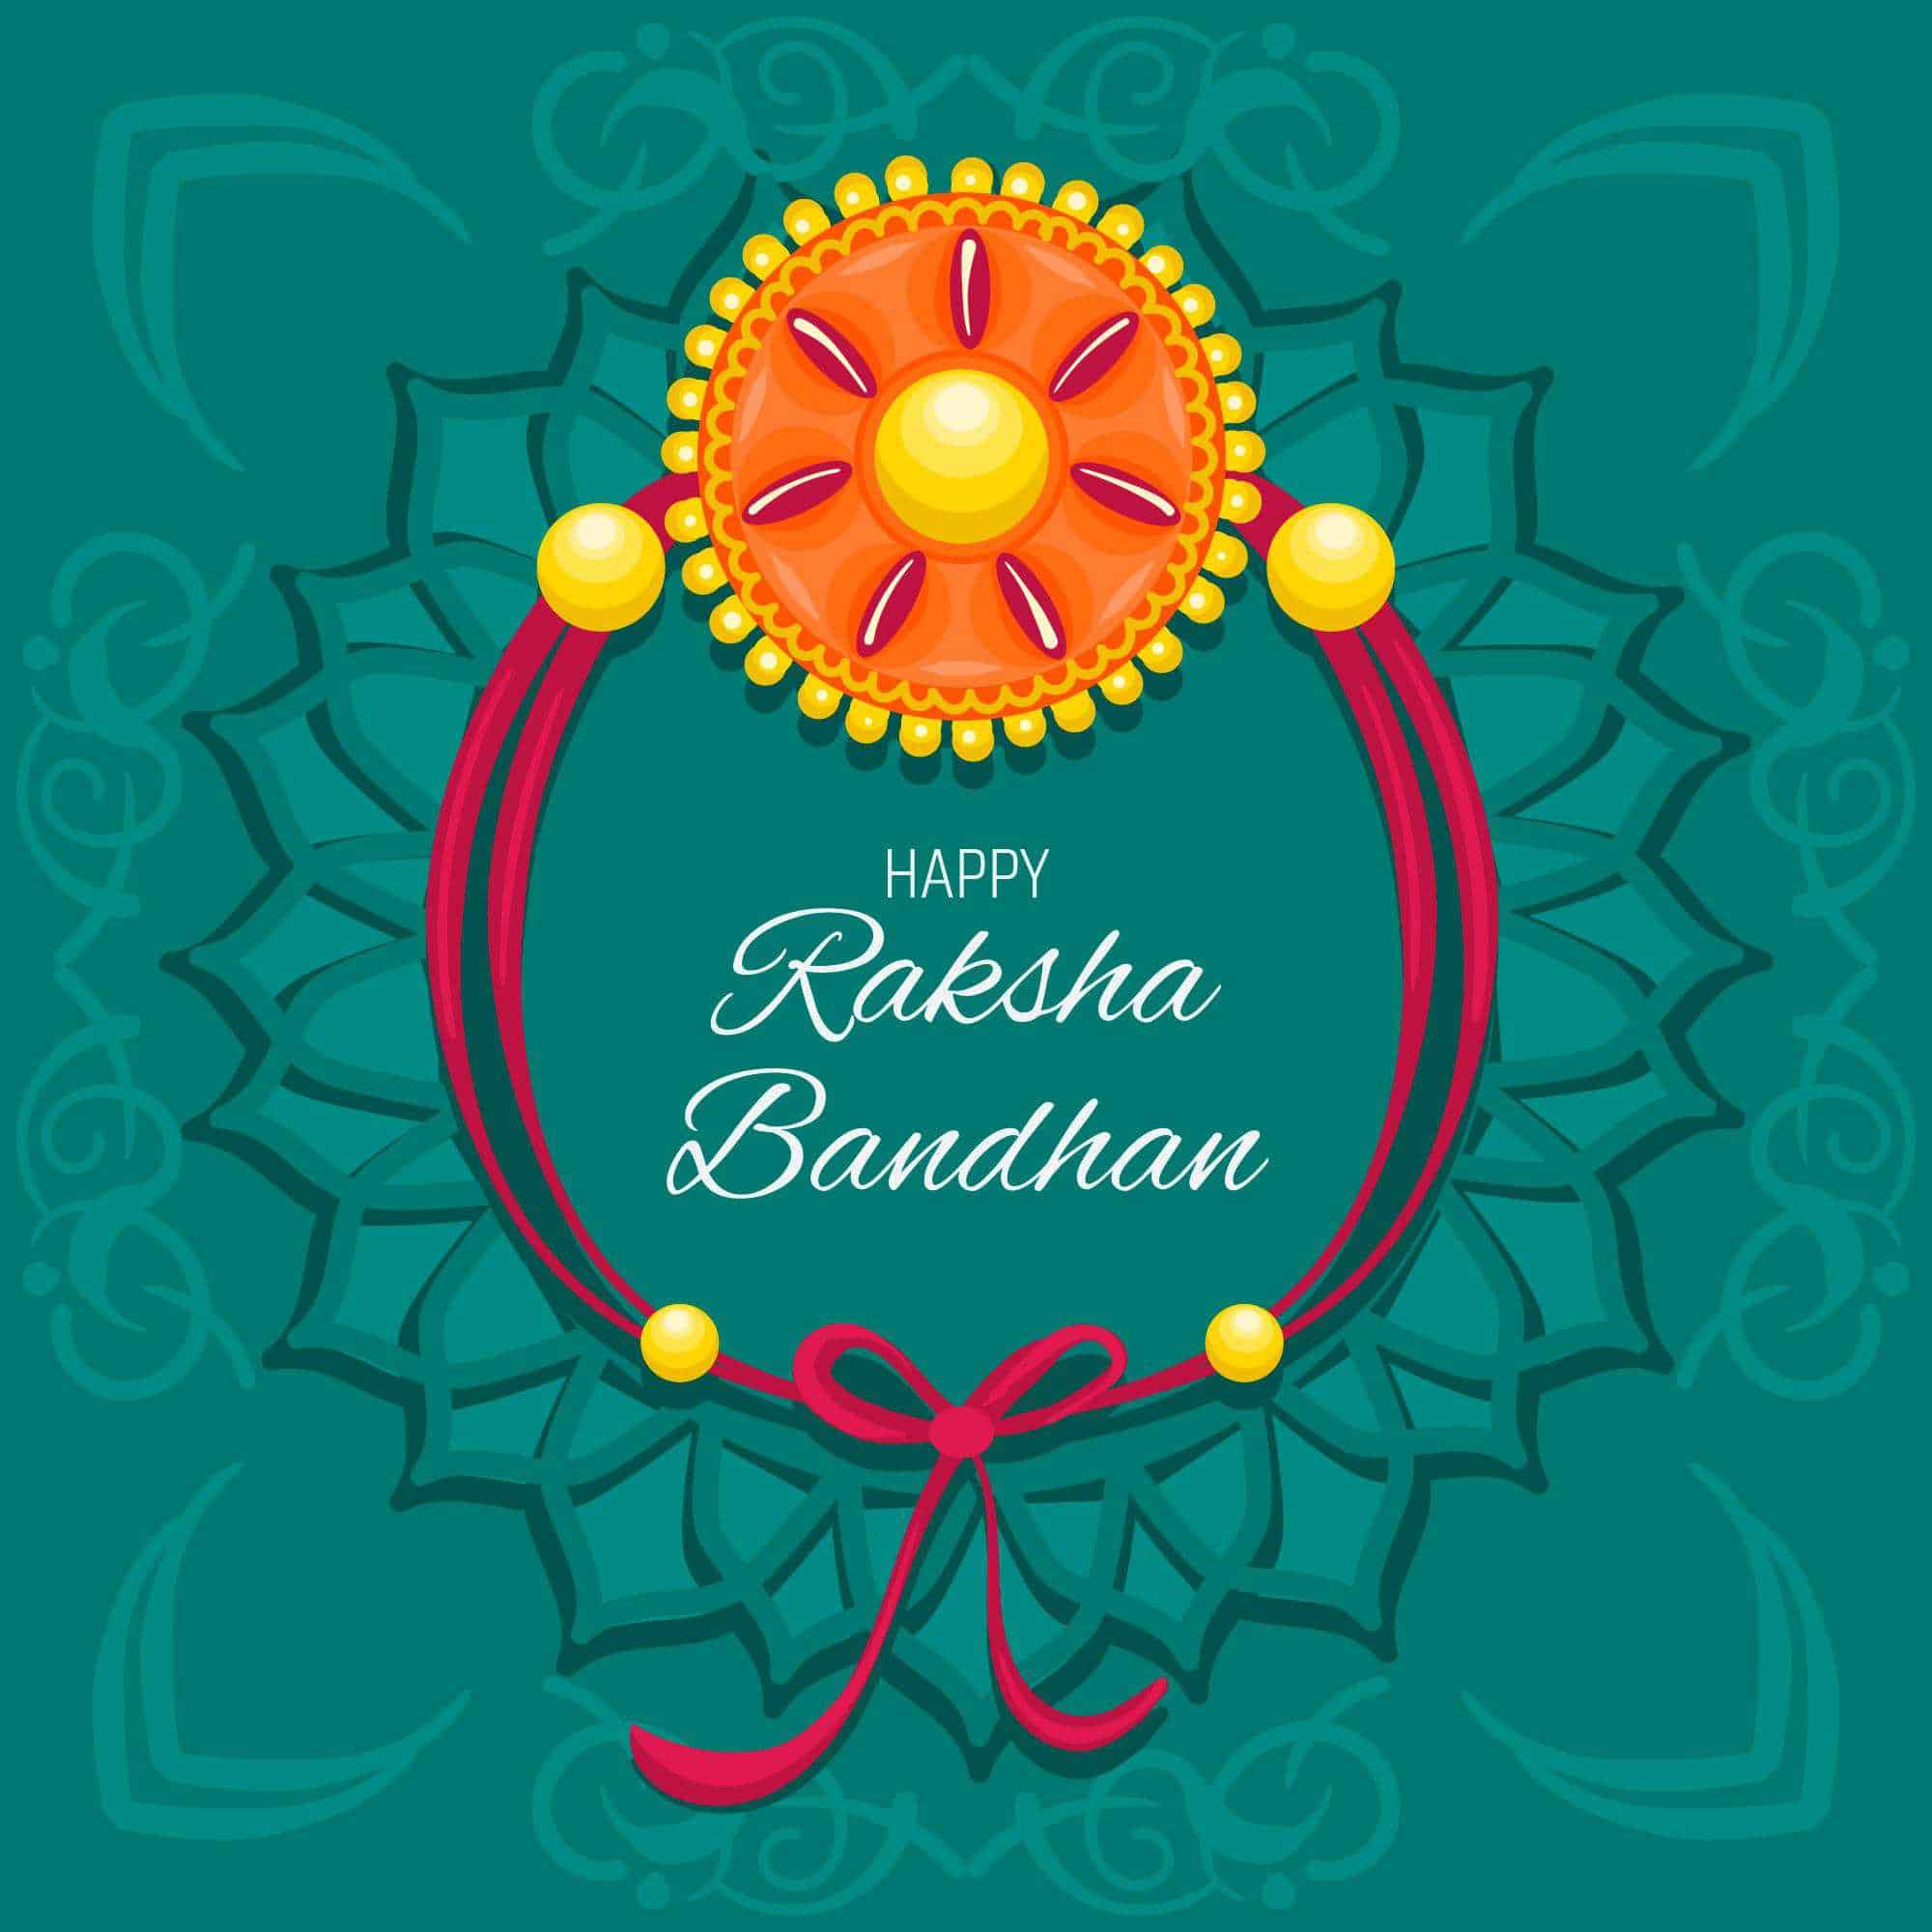 Raksha Bandhan Images HD